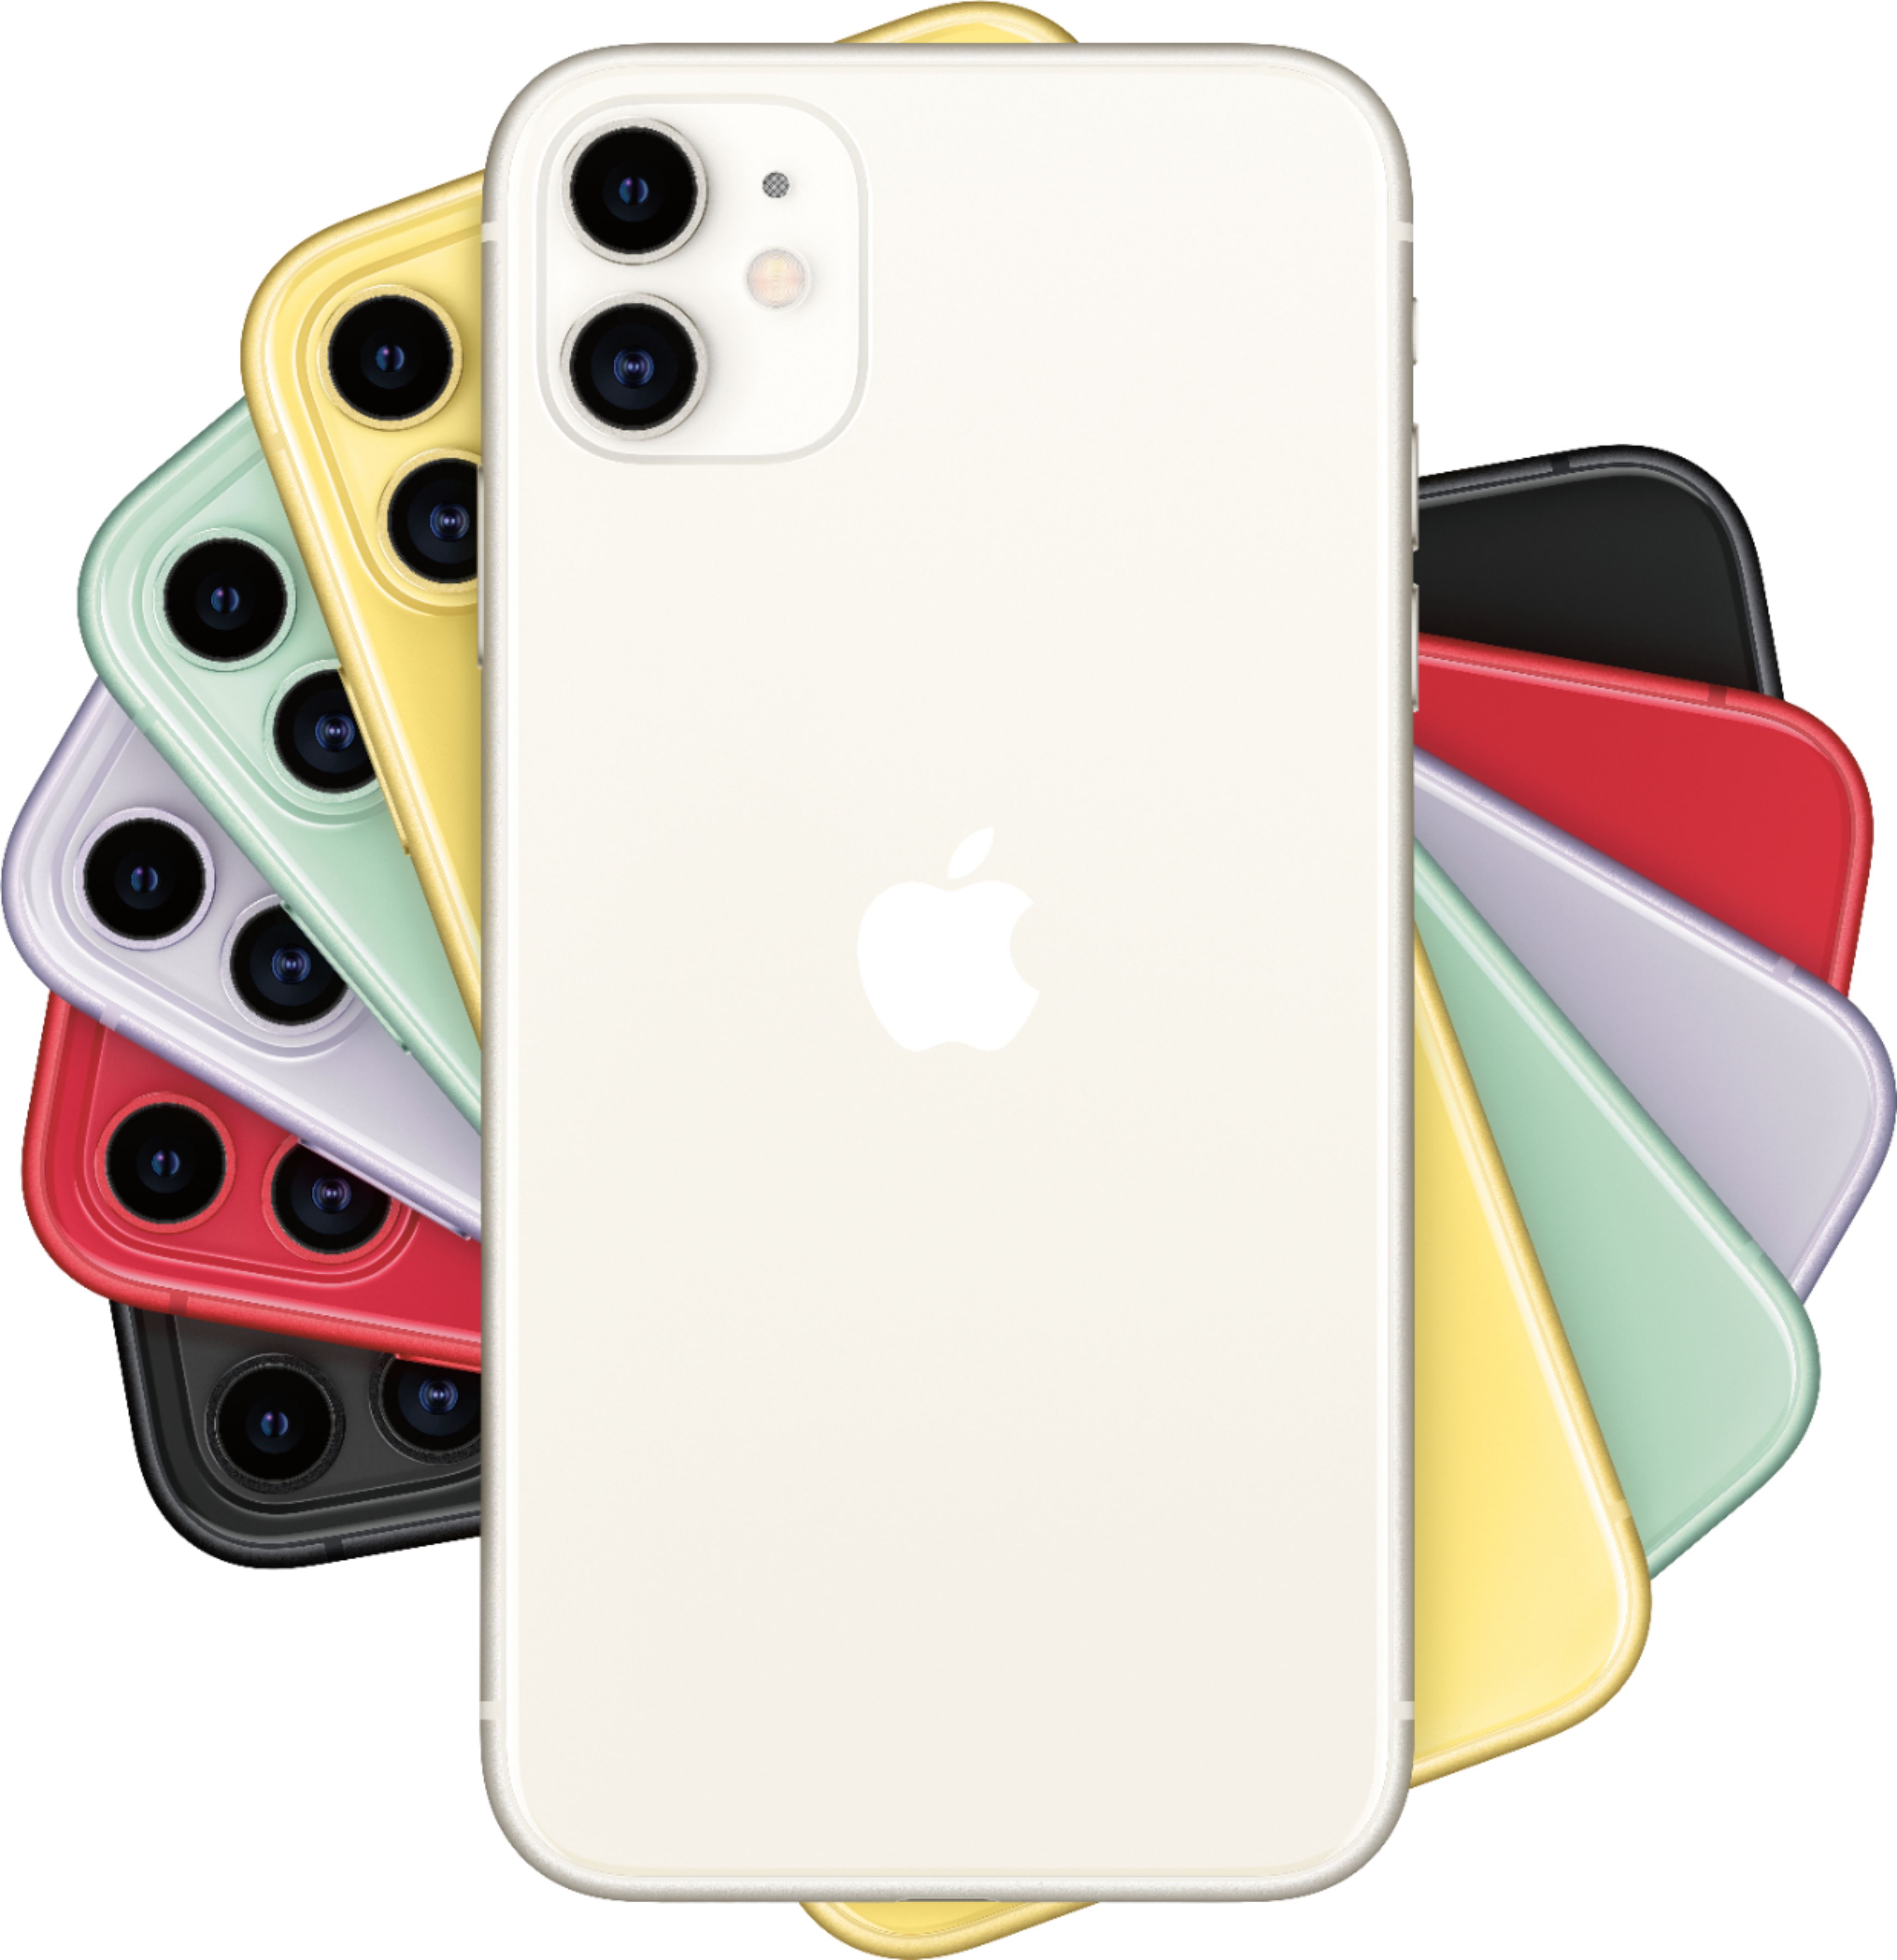 Apple iPhone 11 128GB White (Verizon) MWLF2LL/A - Best Buy